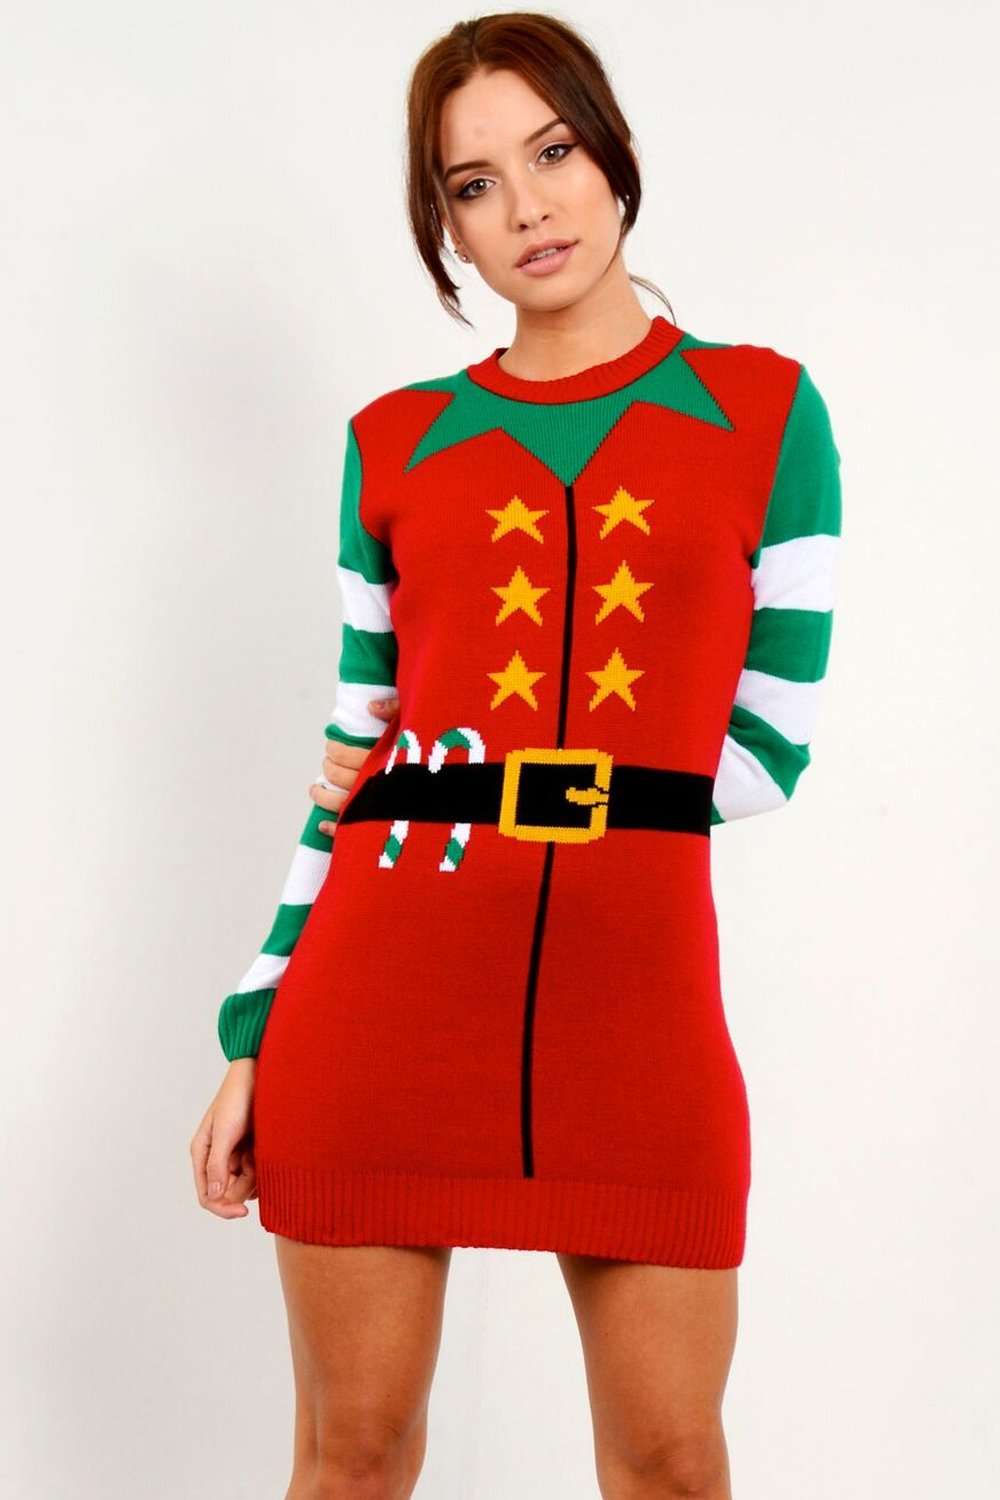 Christmas Elf Costume Knitted Jumper Dress - bejealous-com